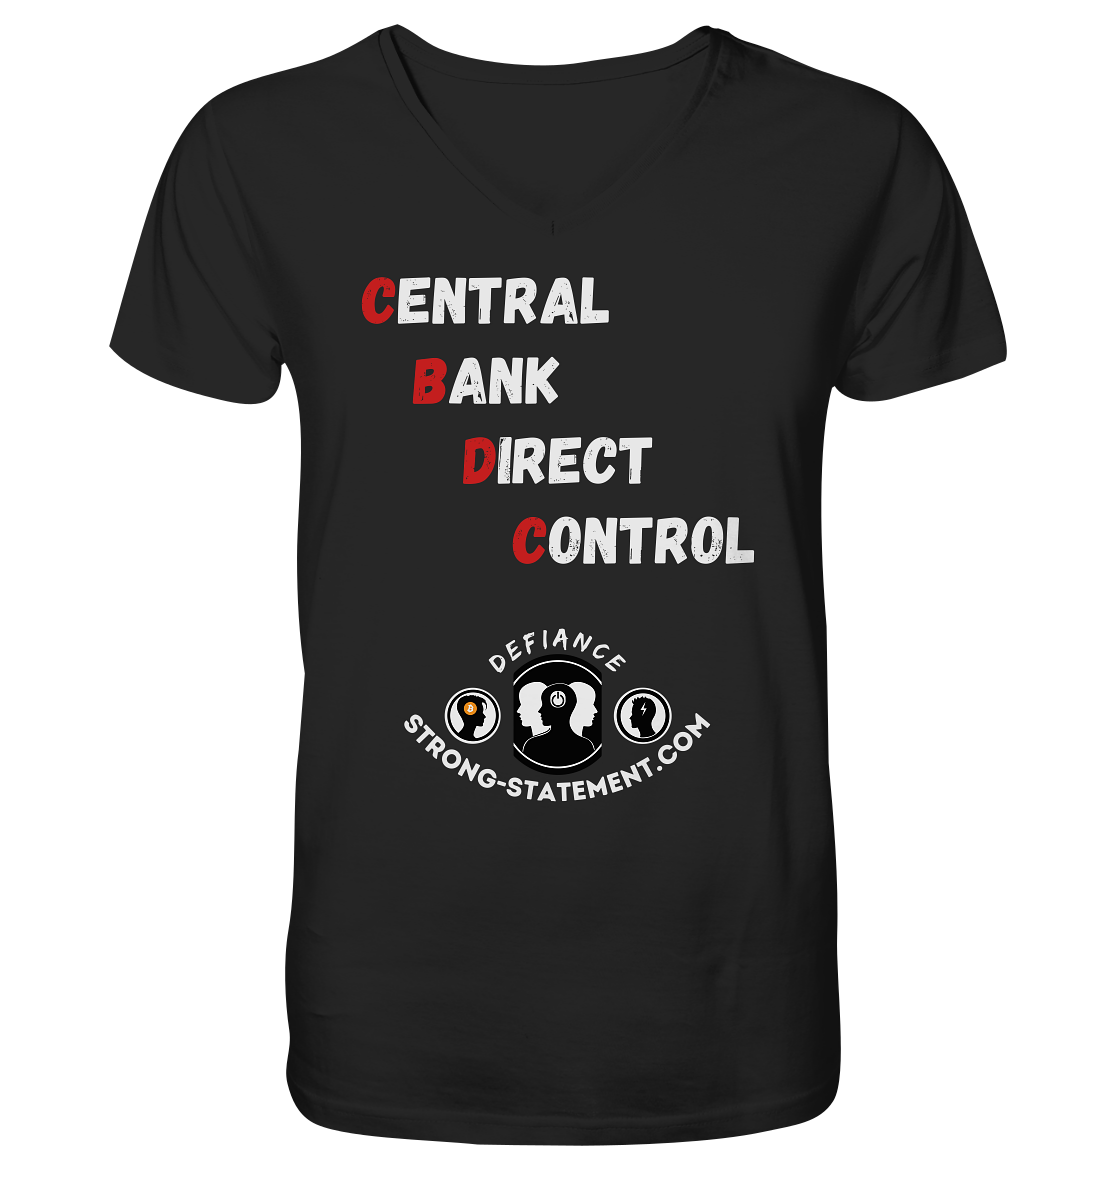 CENTRAL BANK DIRECT CONTROL - Defiance - Strong-Statement.com - V-Neck Shirt